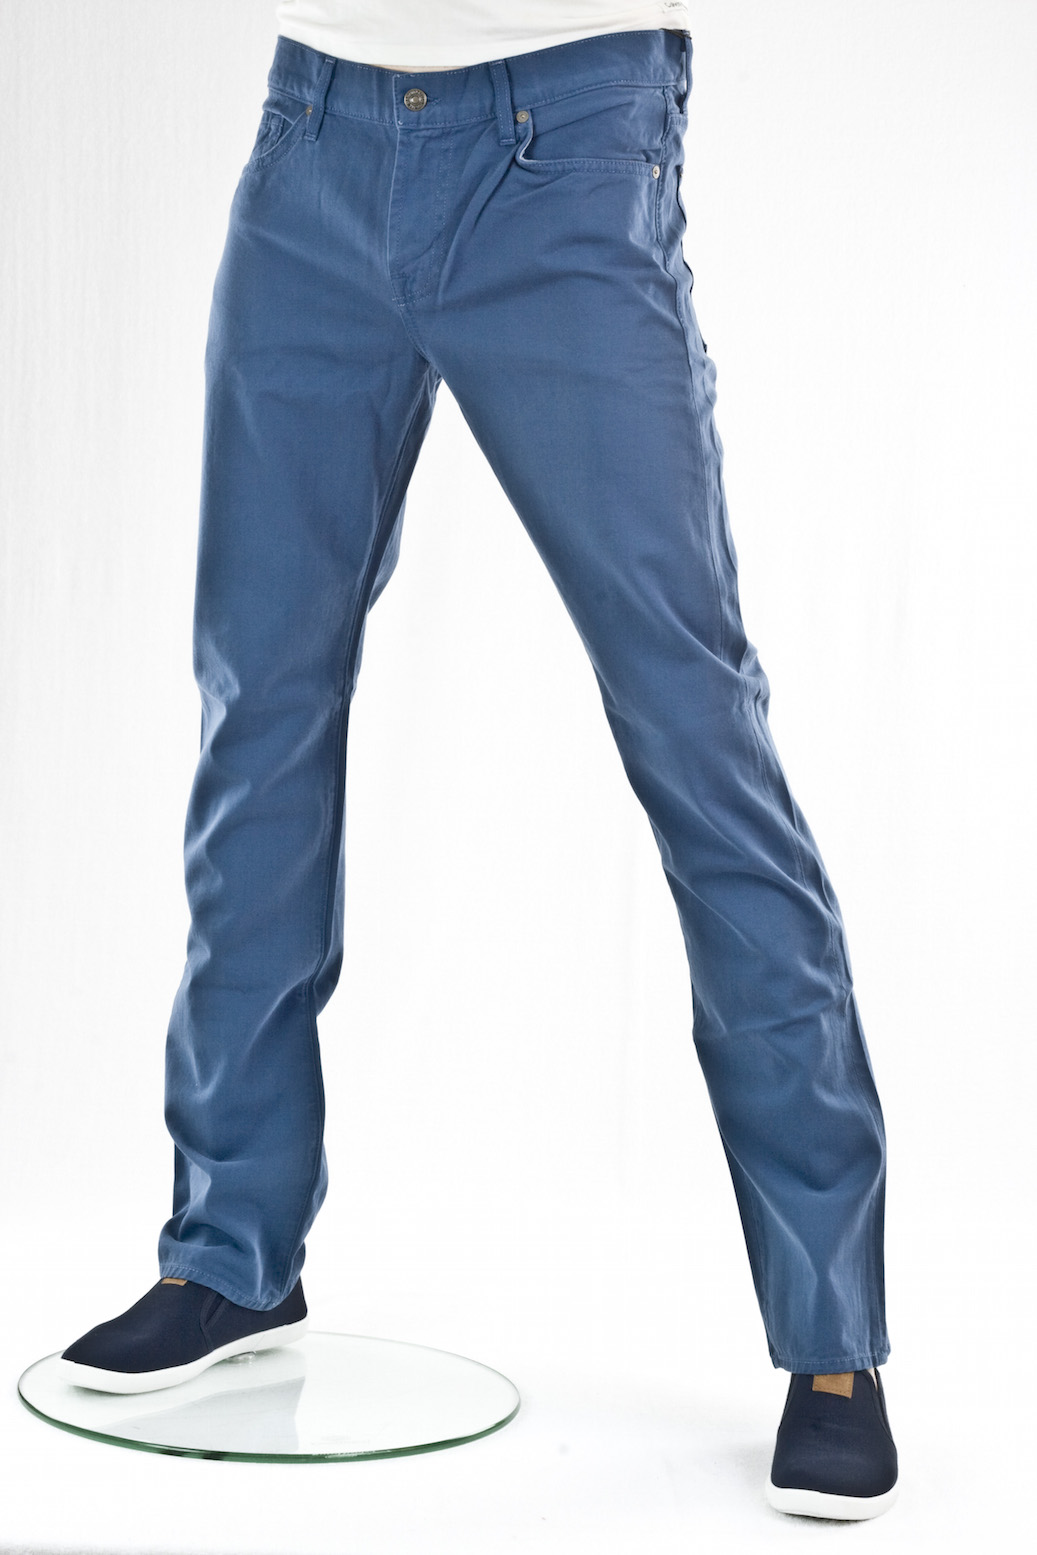 Мужские джинсы 7 for all Mankind "свободные слим" Slimmy blue jean